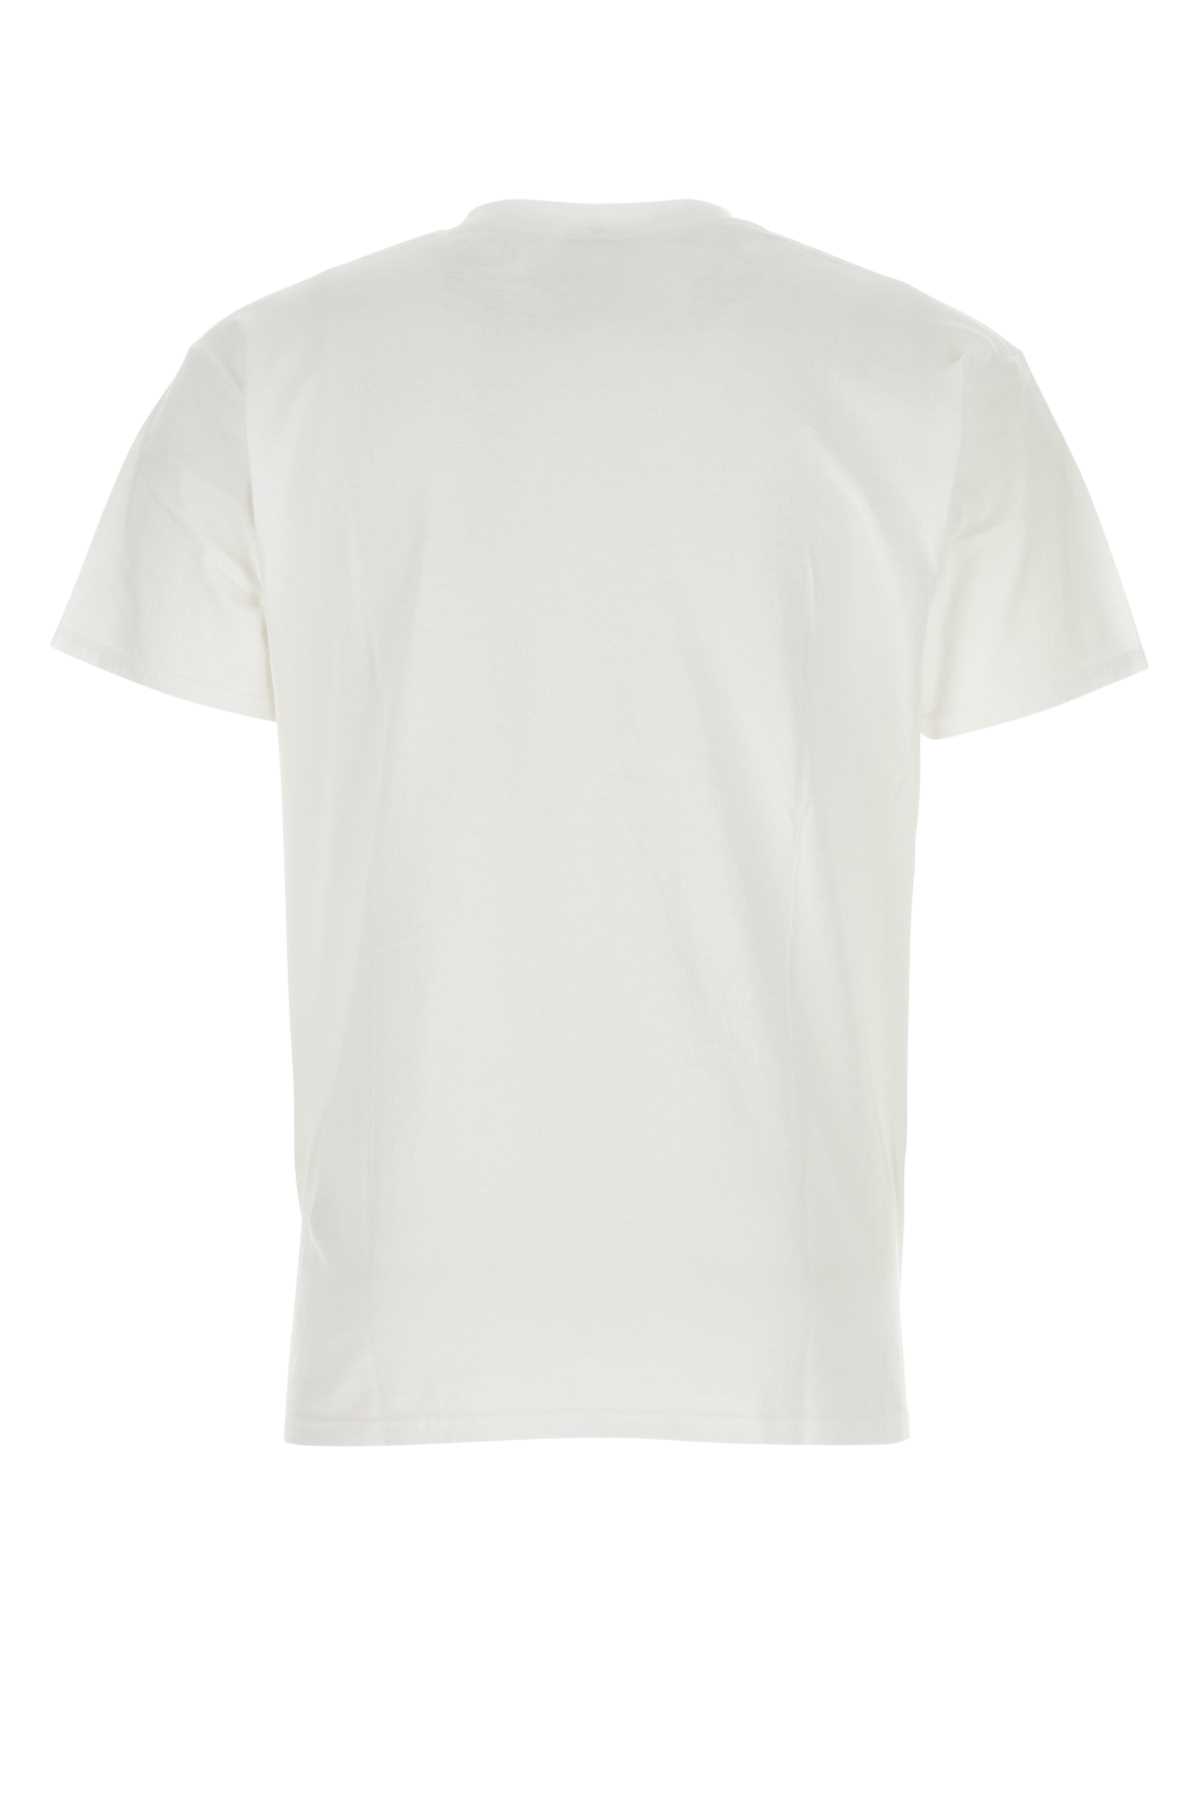 Wild Donkey White Cotton T-shirt In Wd018